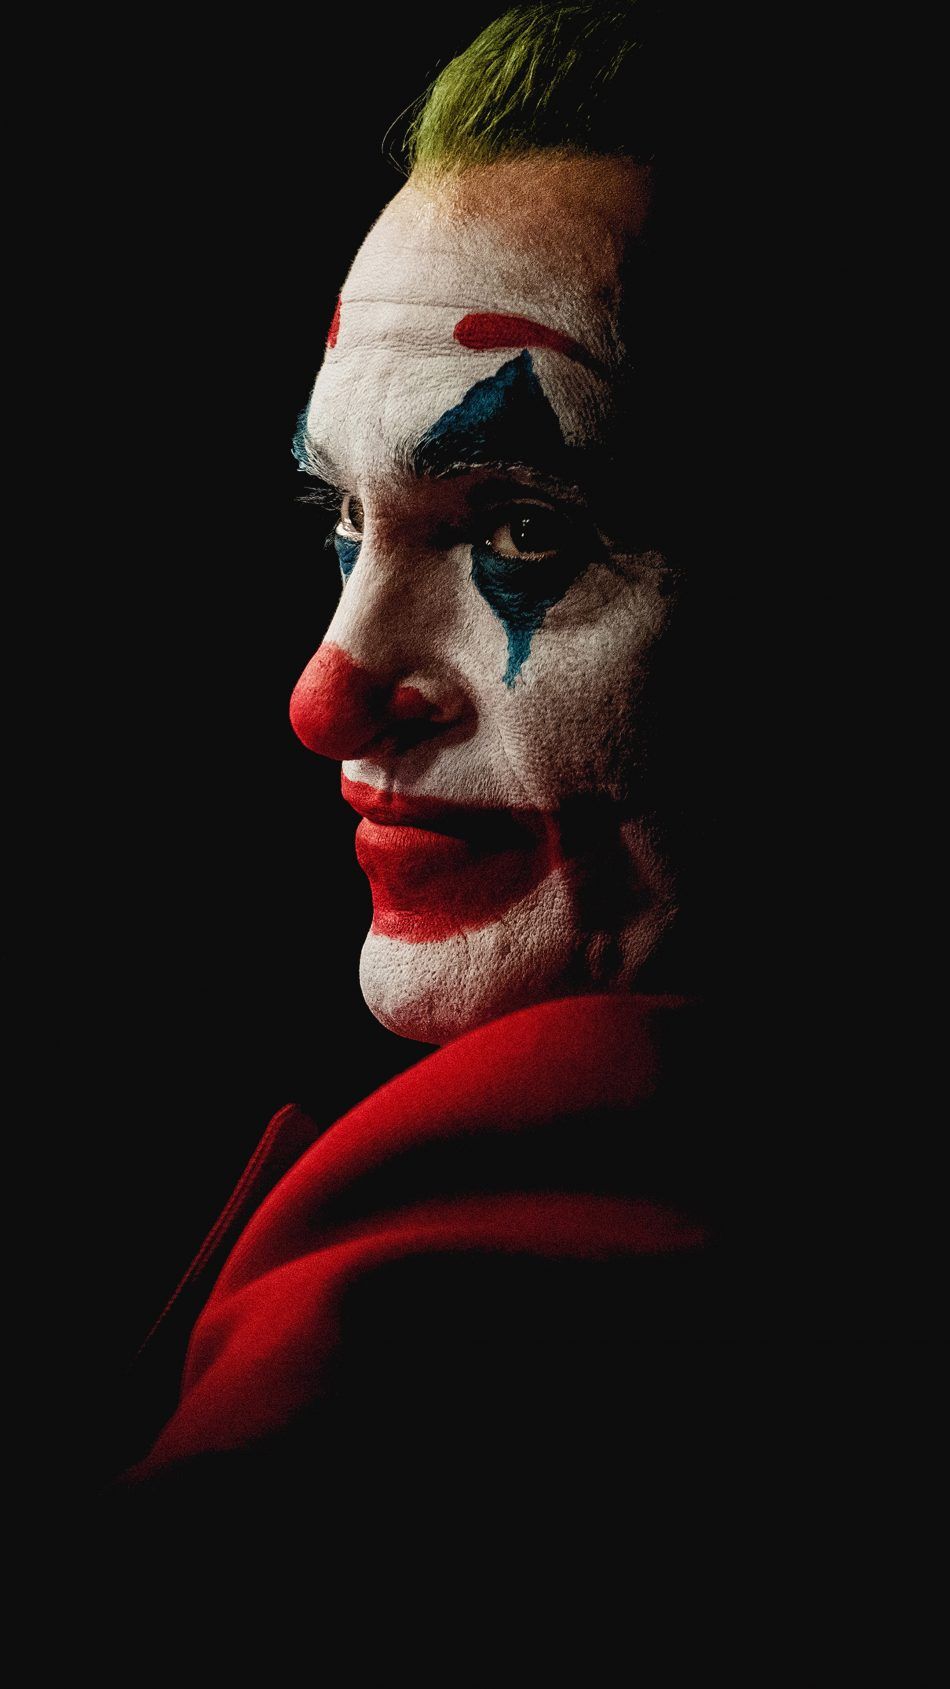 Joaquin Phoenix Joker Black Background 4K Ultra HD Mobile Wallpaper. Joker HD wallpaper, Joker image, Joker wallpaper